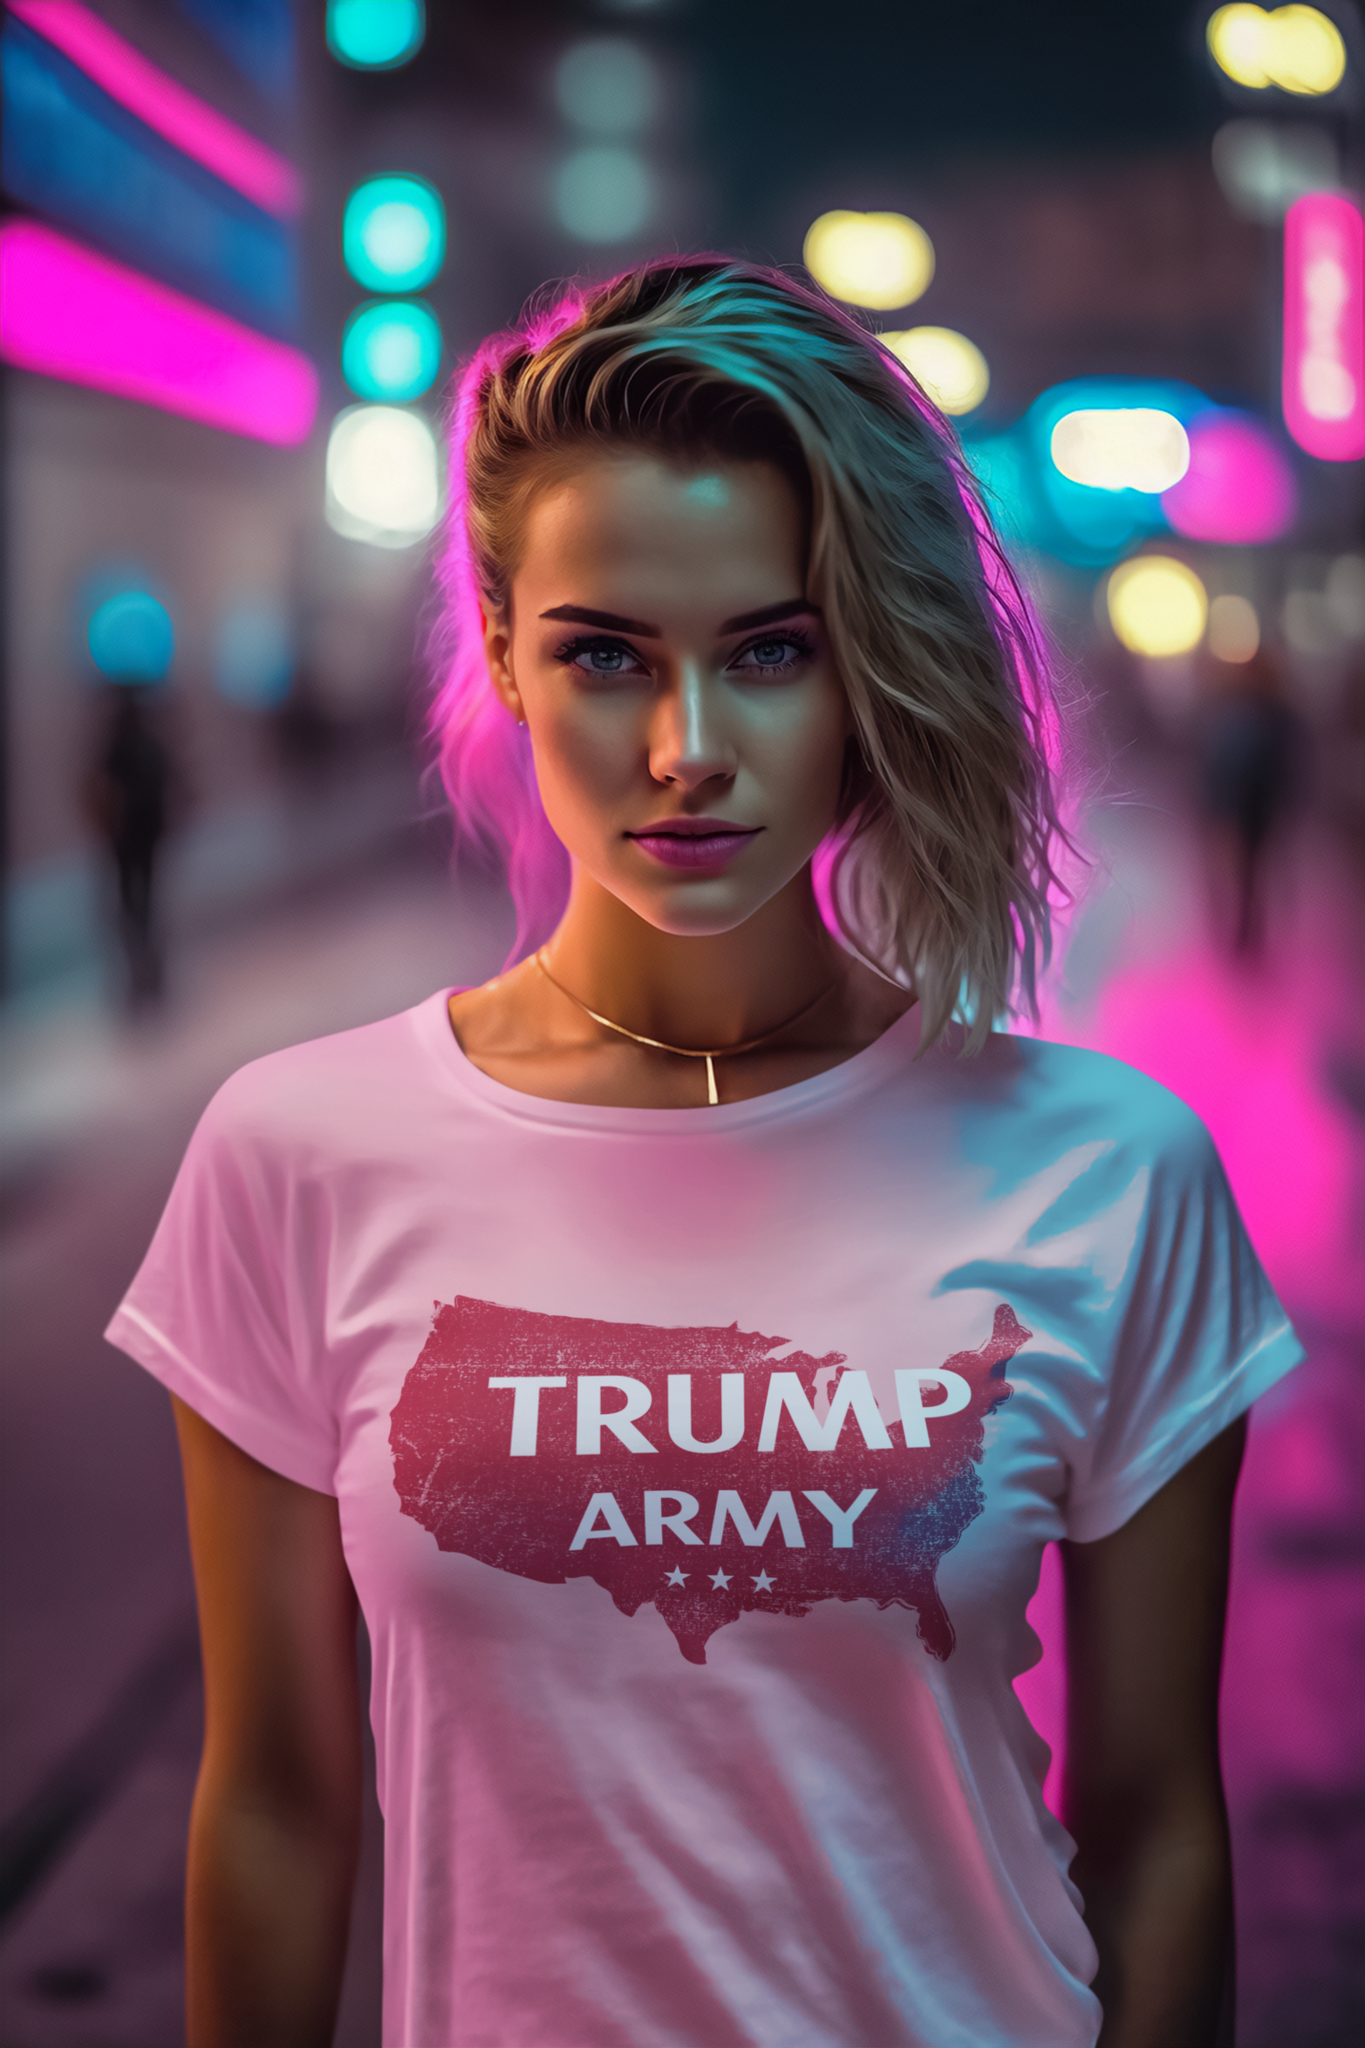 Donald Trump Support Merchandise. T-Shirt Women Ladyfit, Trump Army